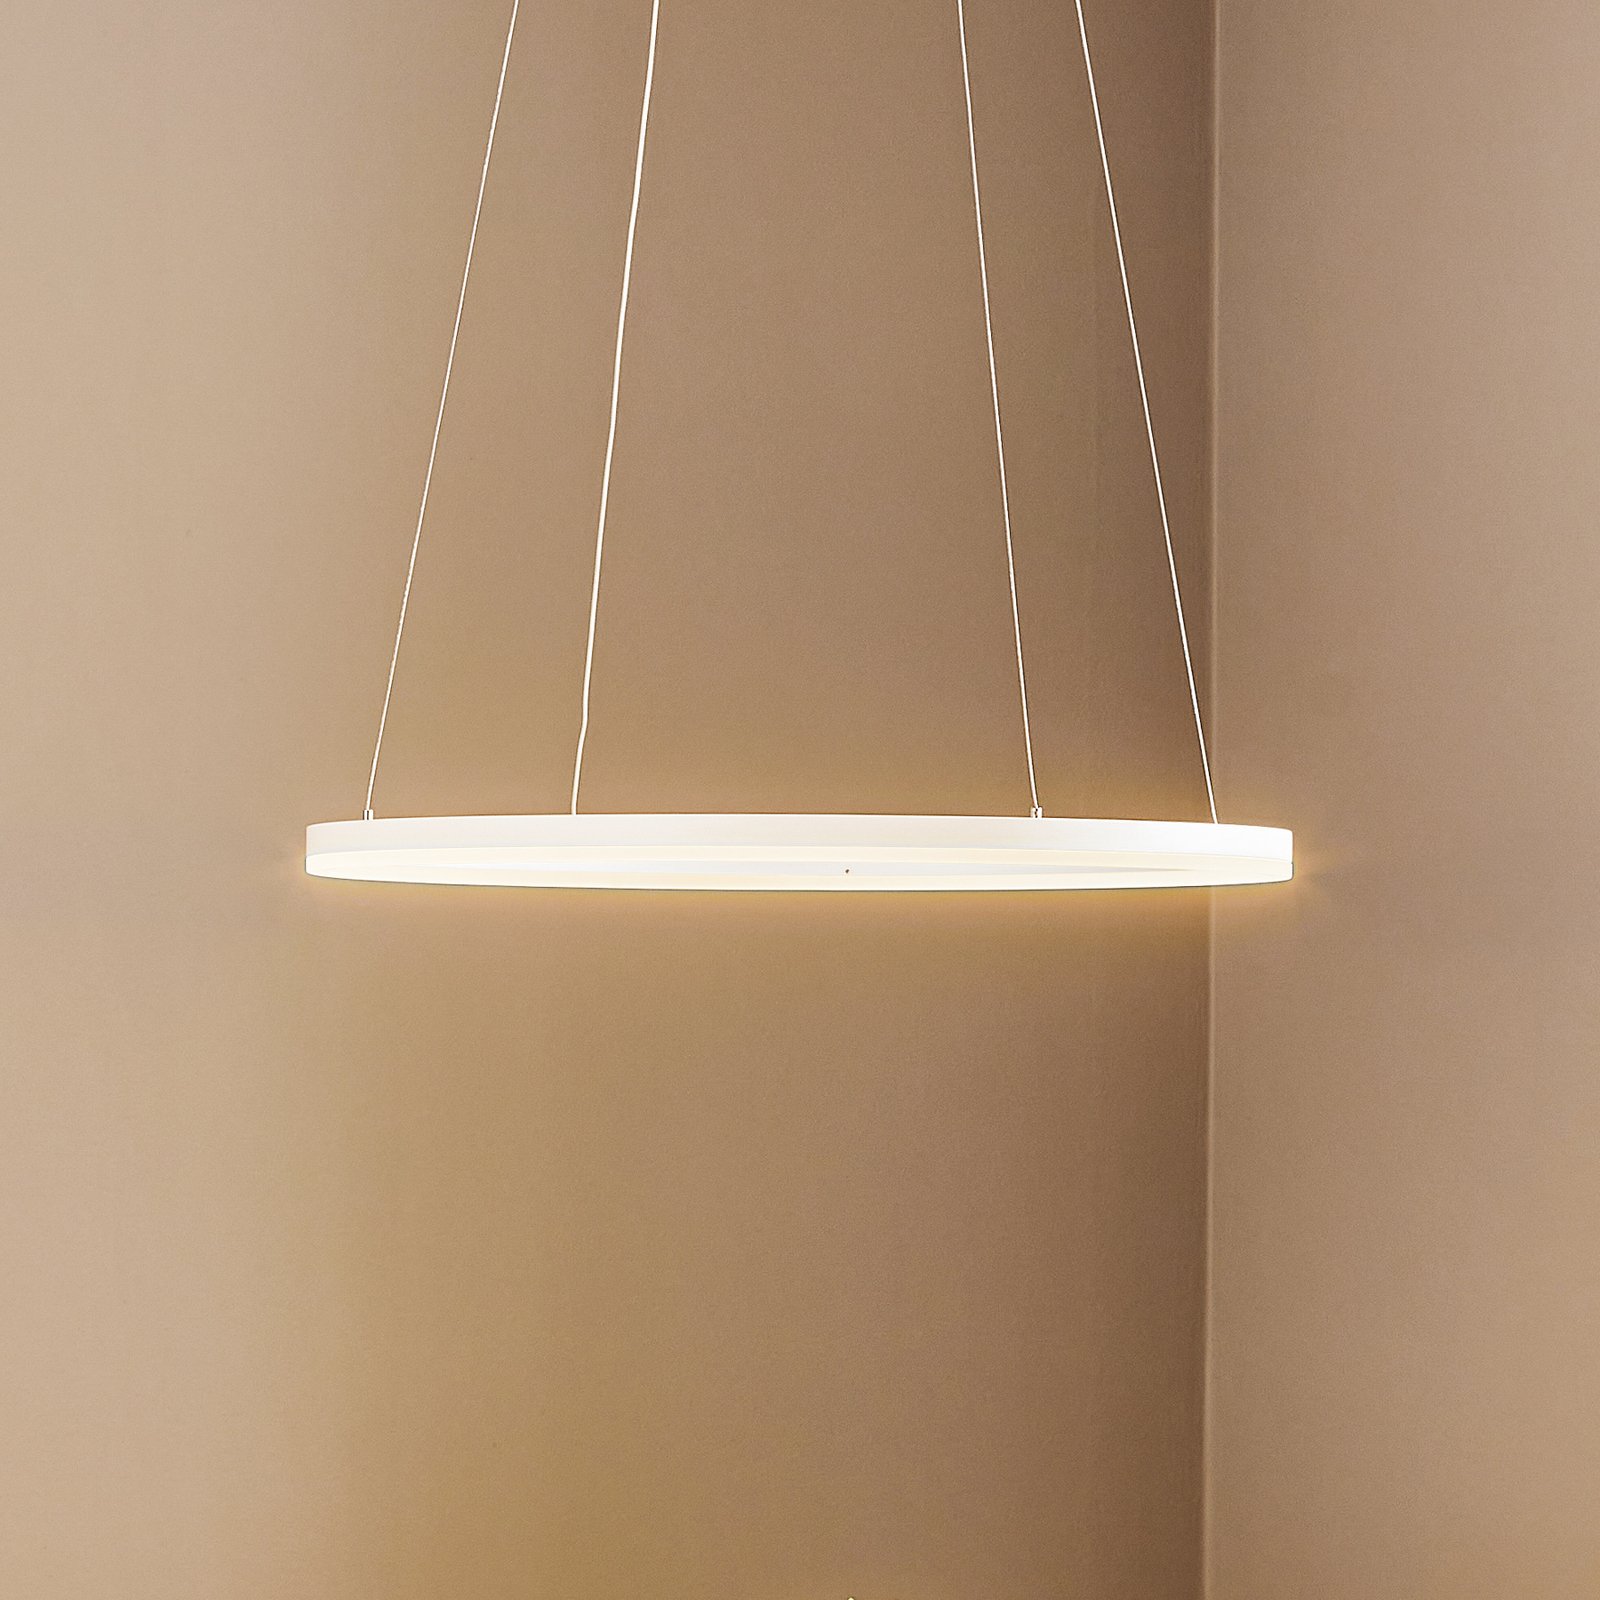 Giotto LED pendant light, one-bulb, white